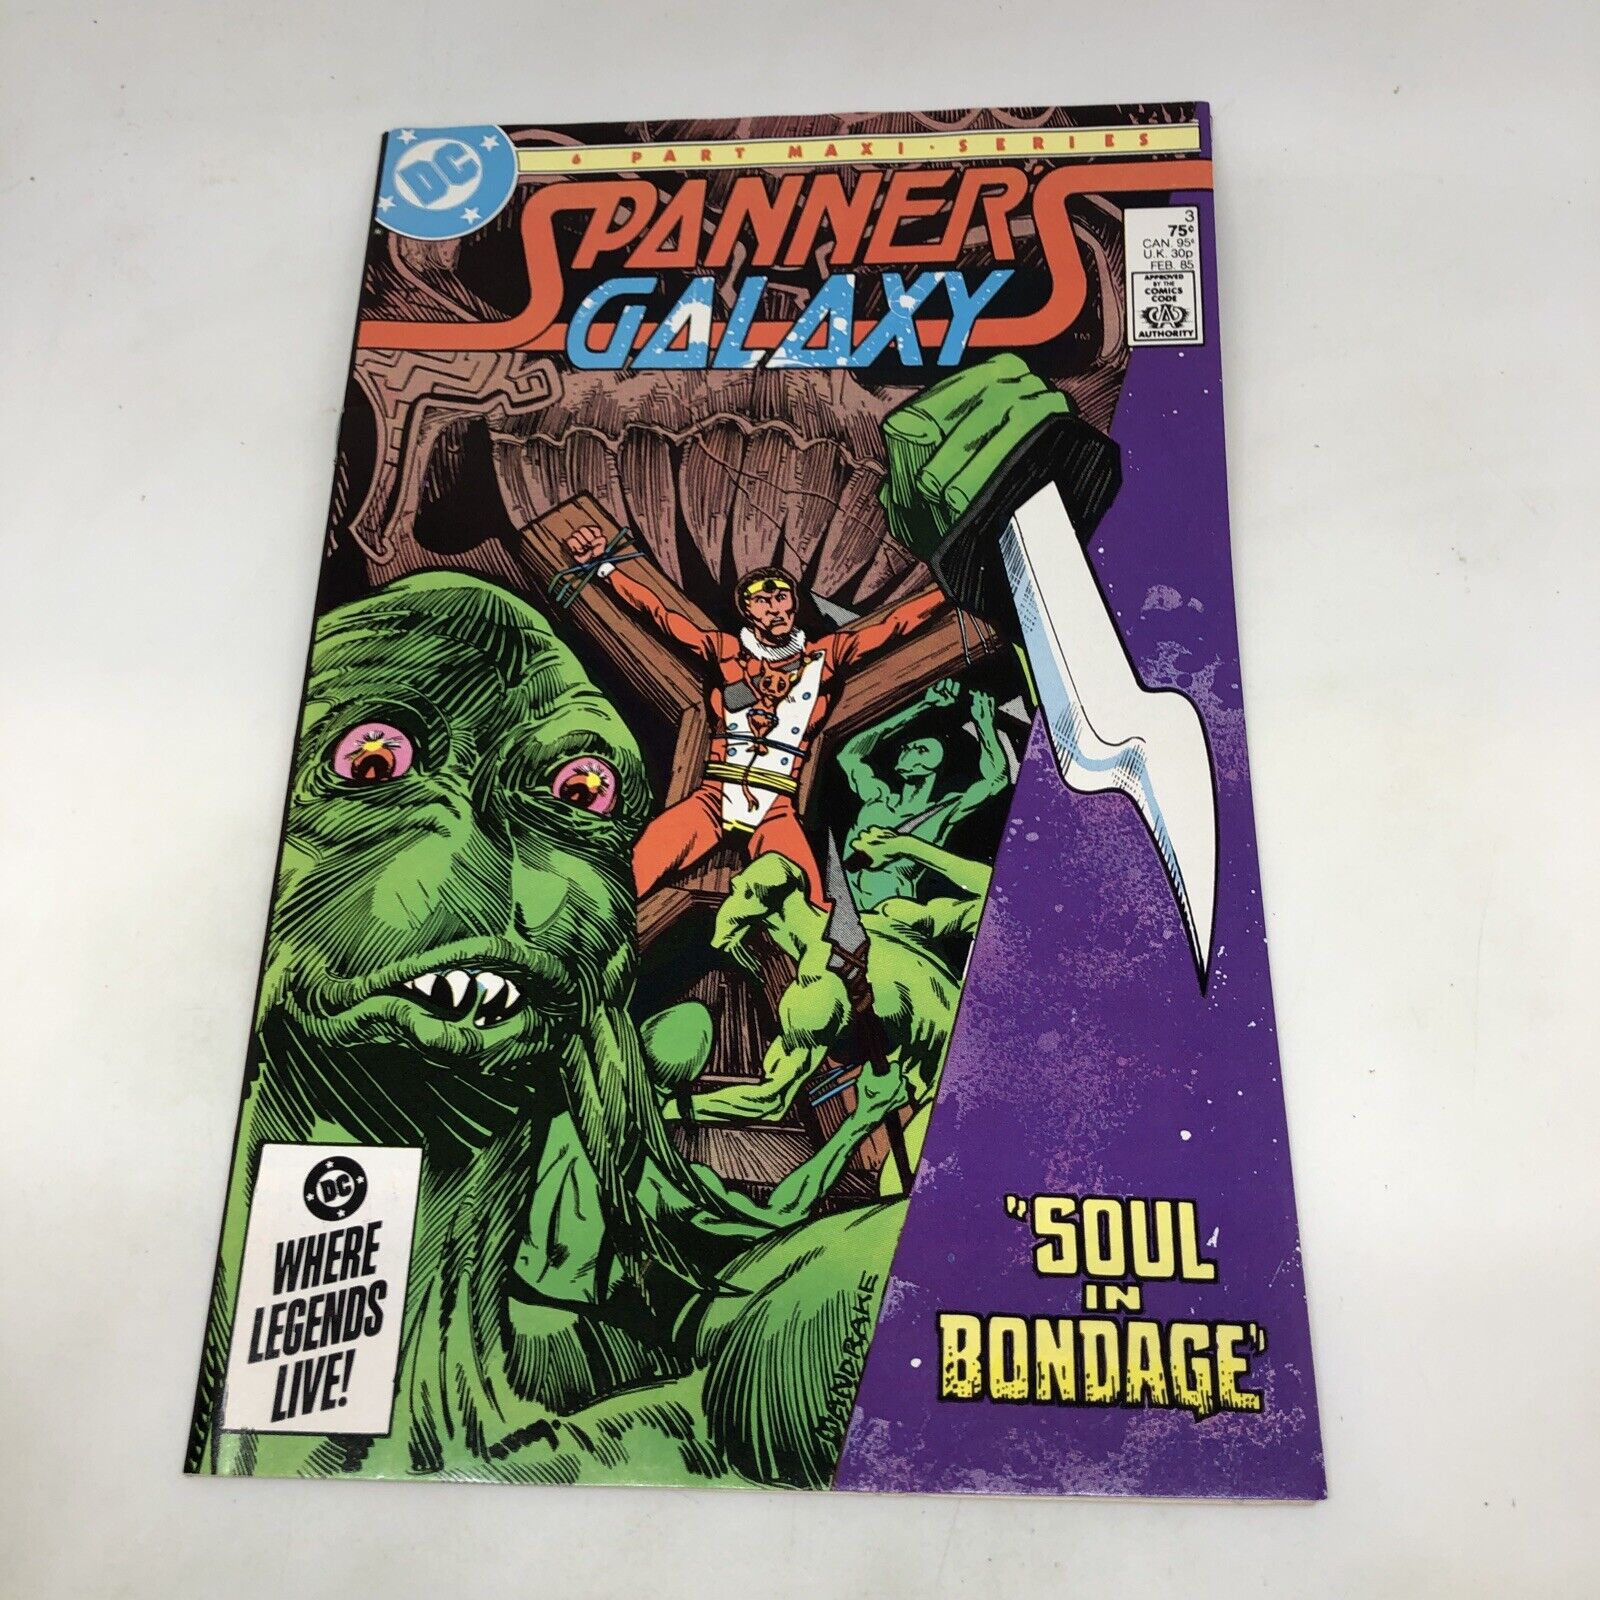 Spanners Galaxy #3 Feb. 1985 DC Comics 